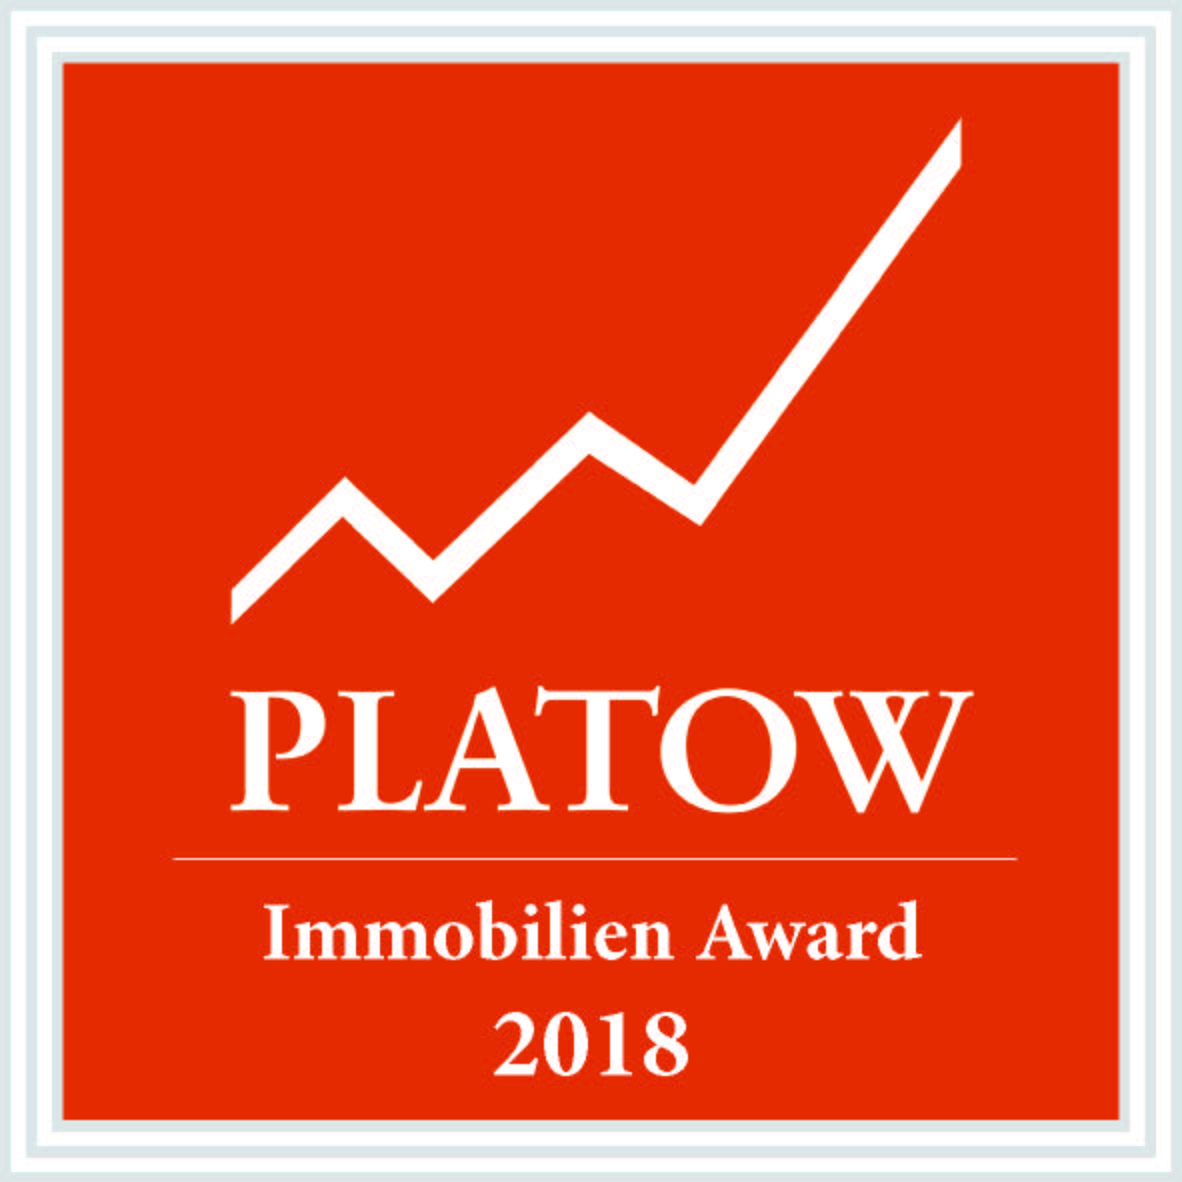 6. PLATOW Immobilien Award